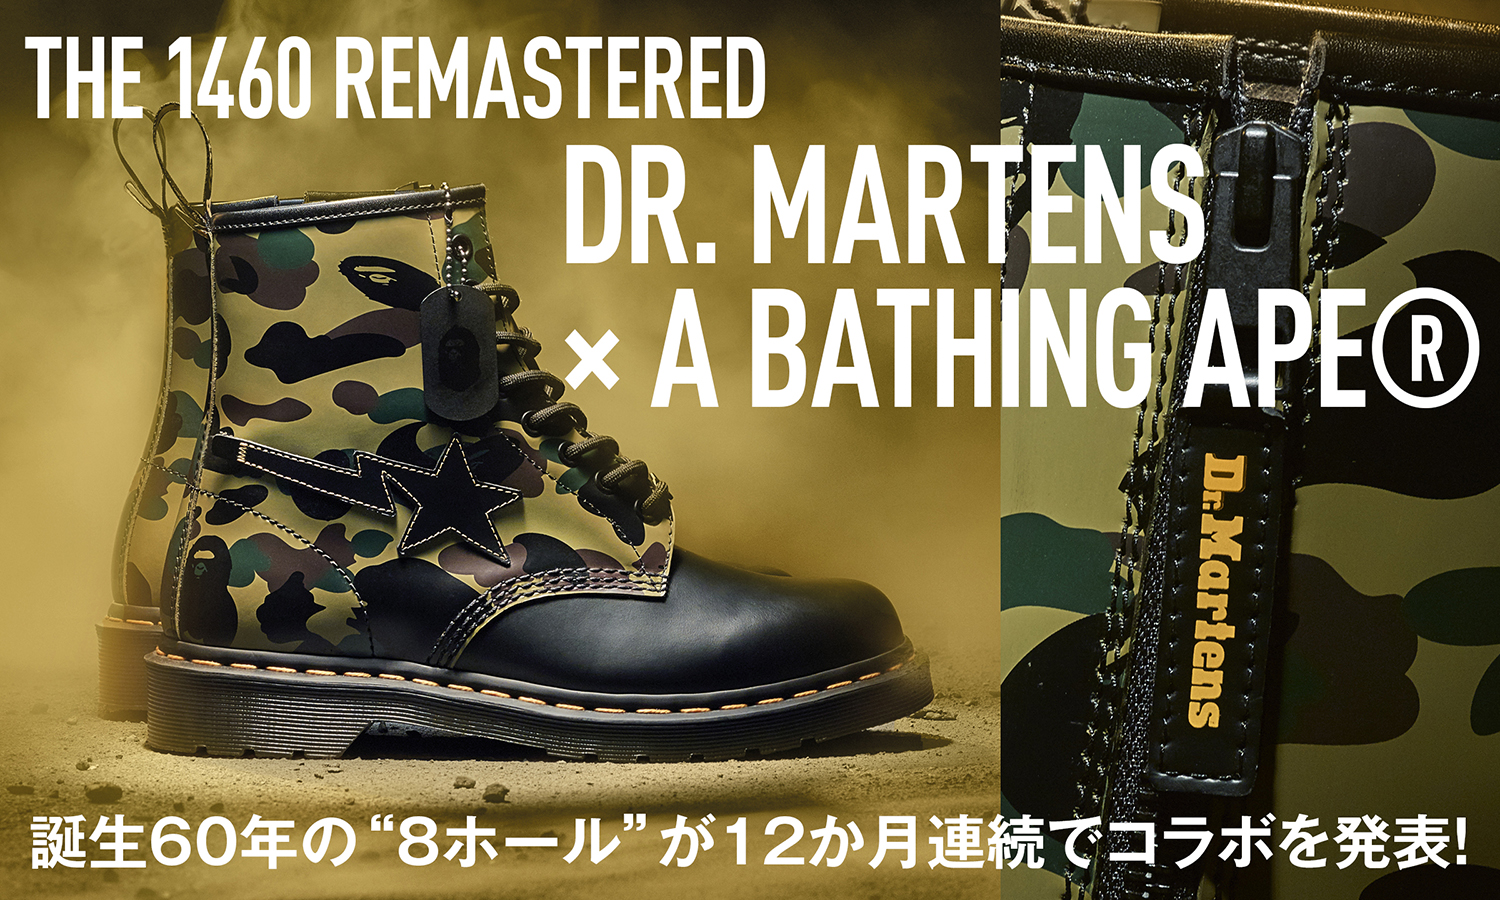 Dr. Martens  x A Bathing Ape コラボブーツ新品未使用品正規品です